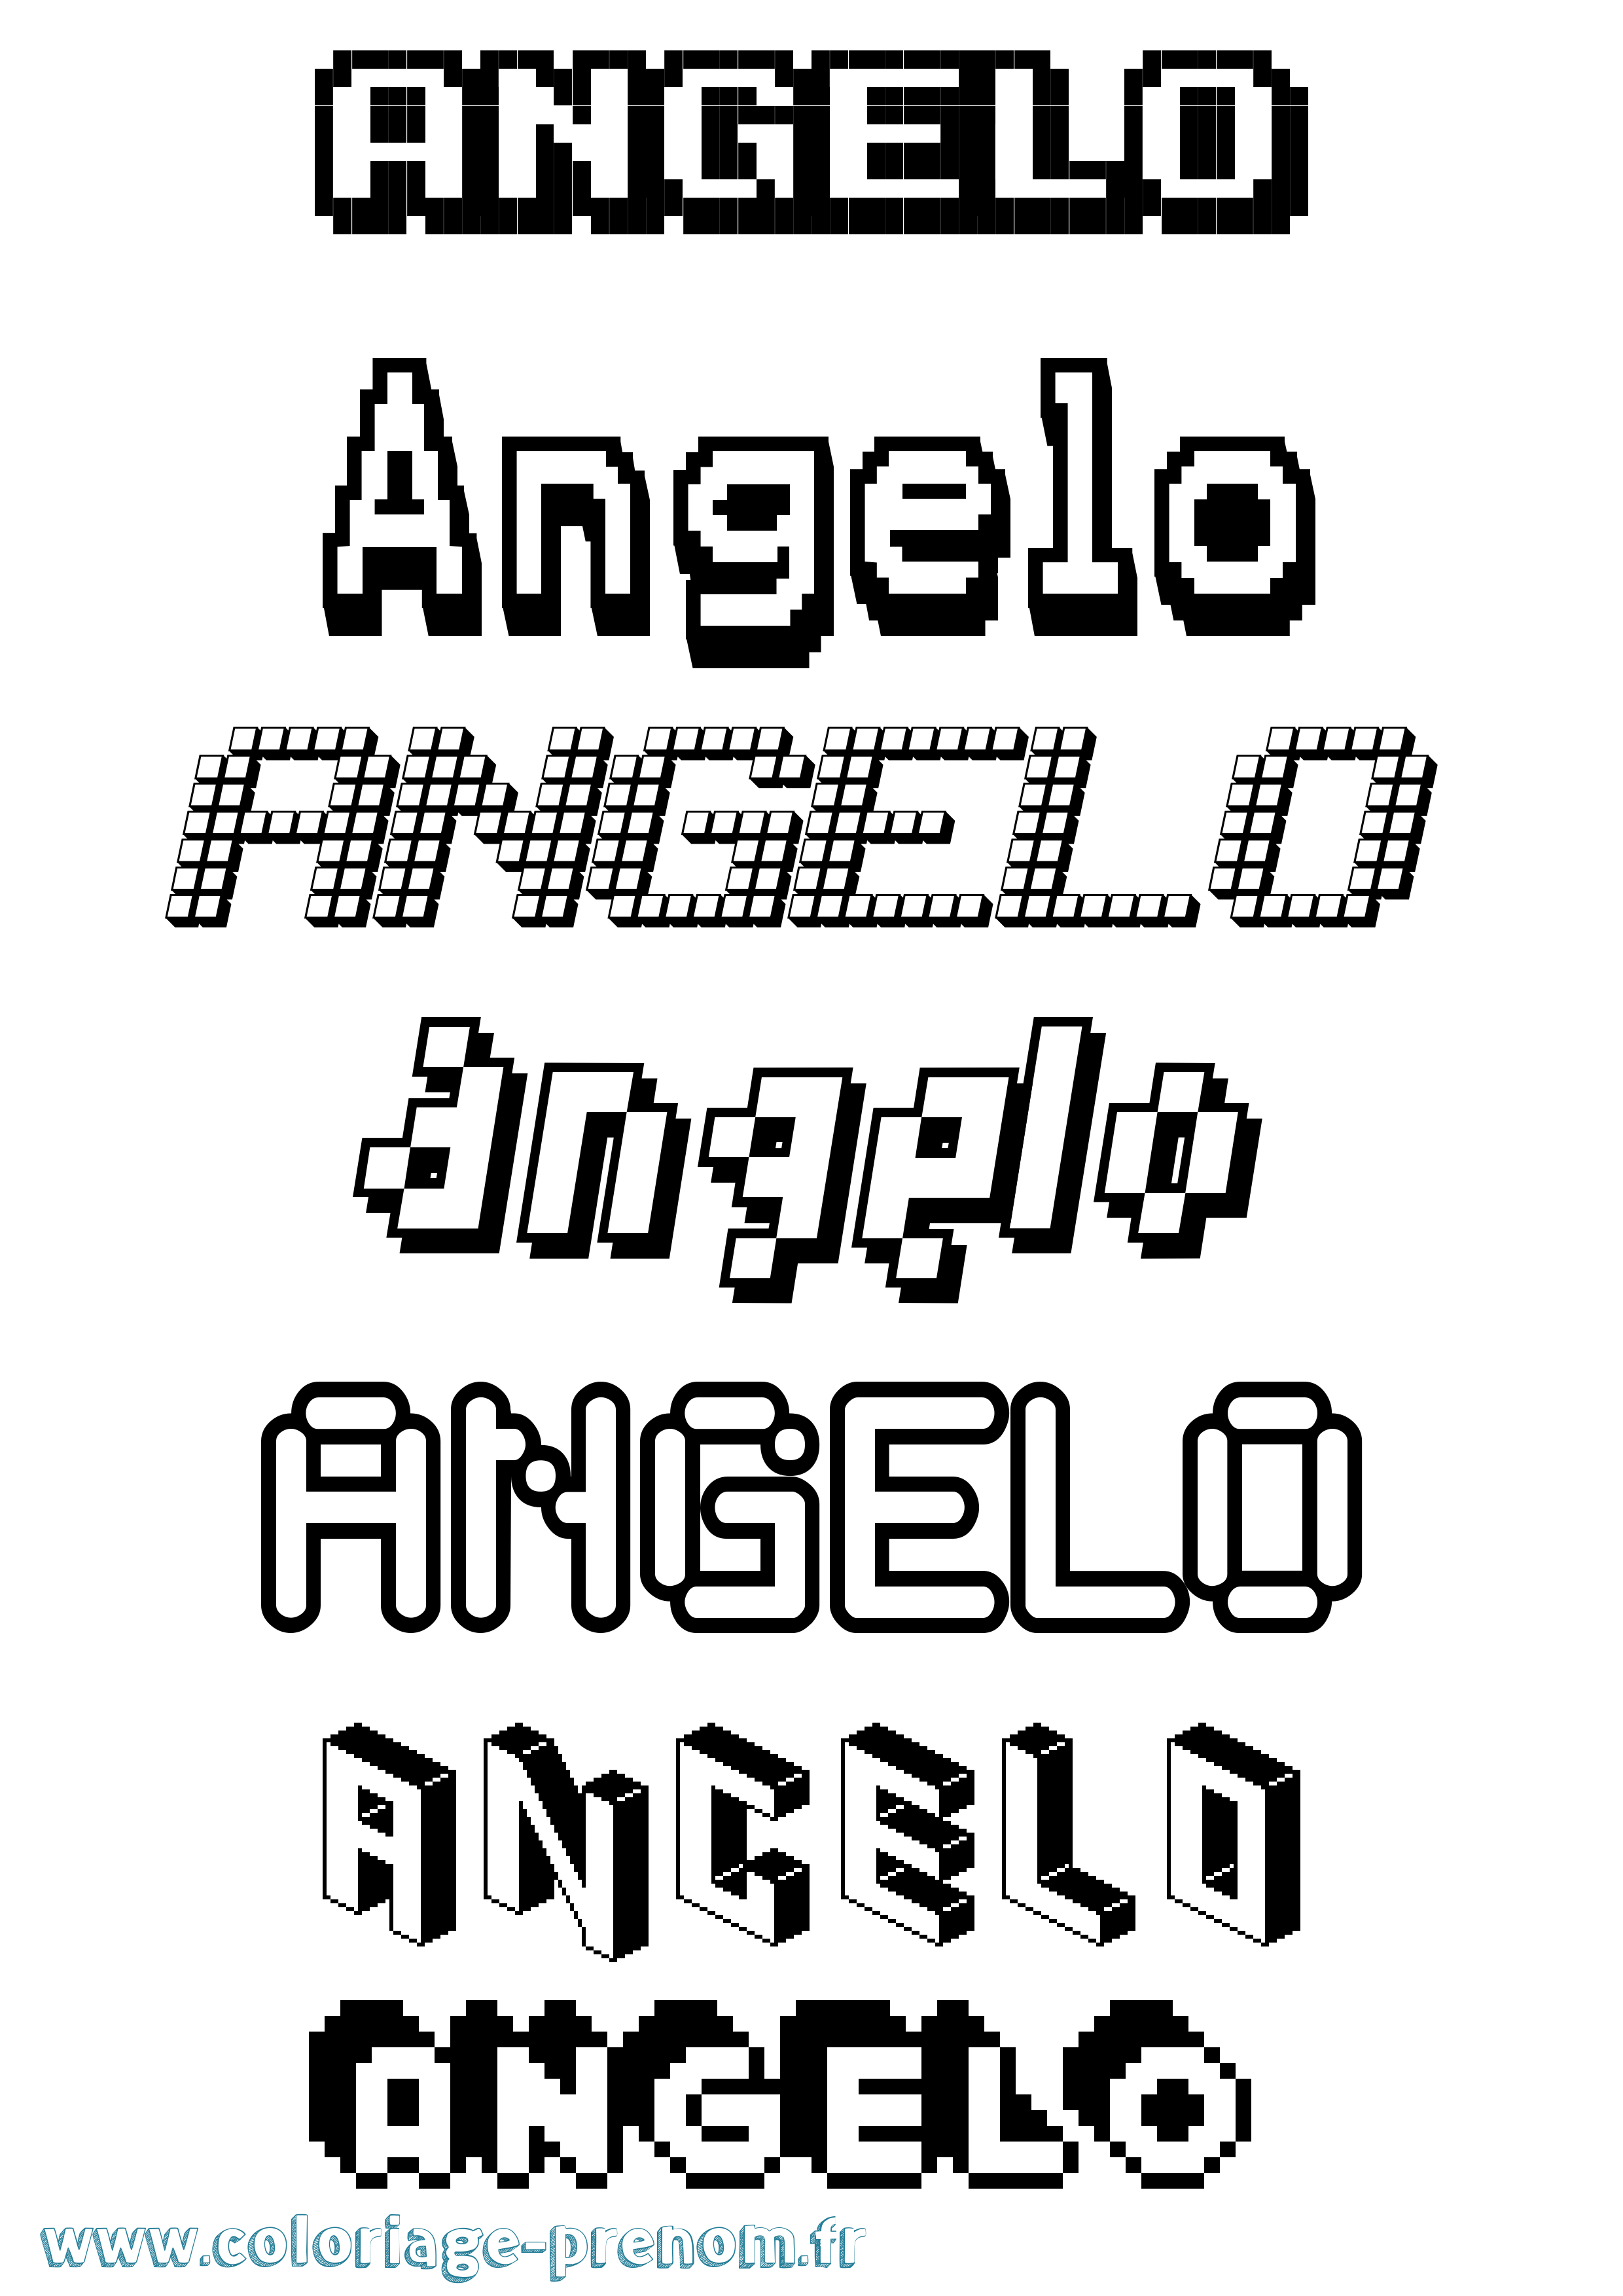 Coloriage prénom Angelo Pixel